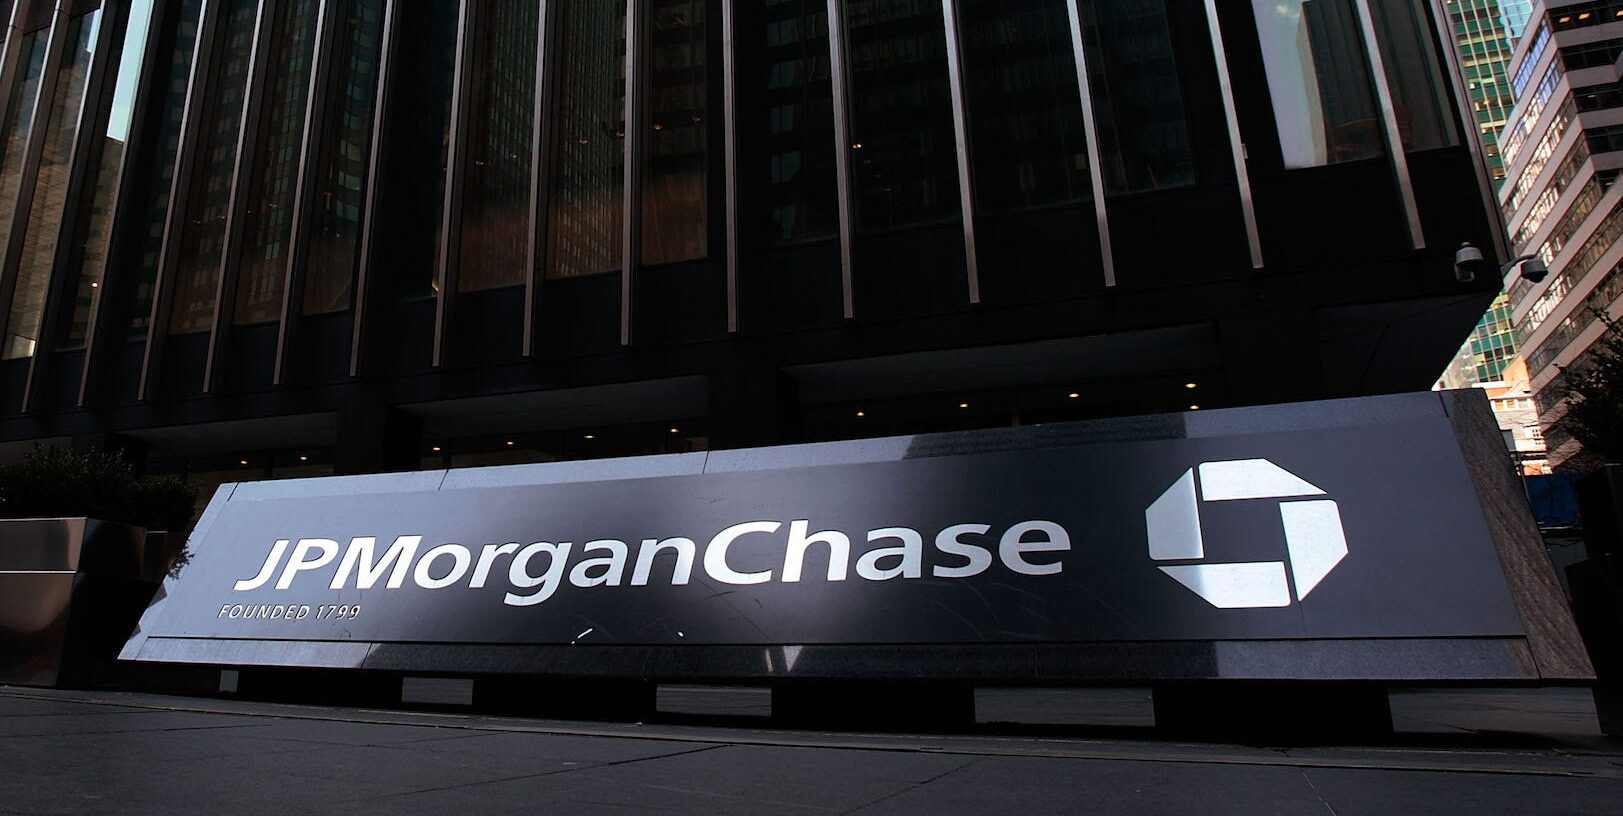 JPMorgan Chase CEO Jamie Dimon Lauds PM Modi’s Leadership